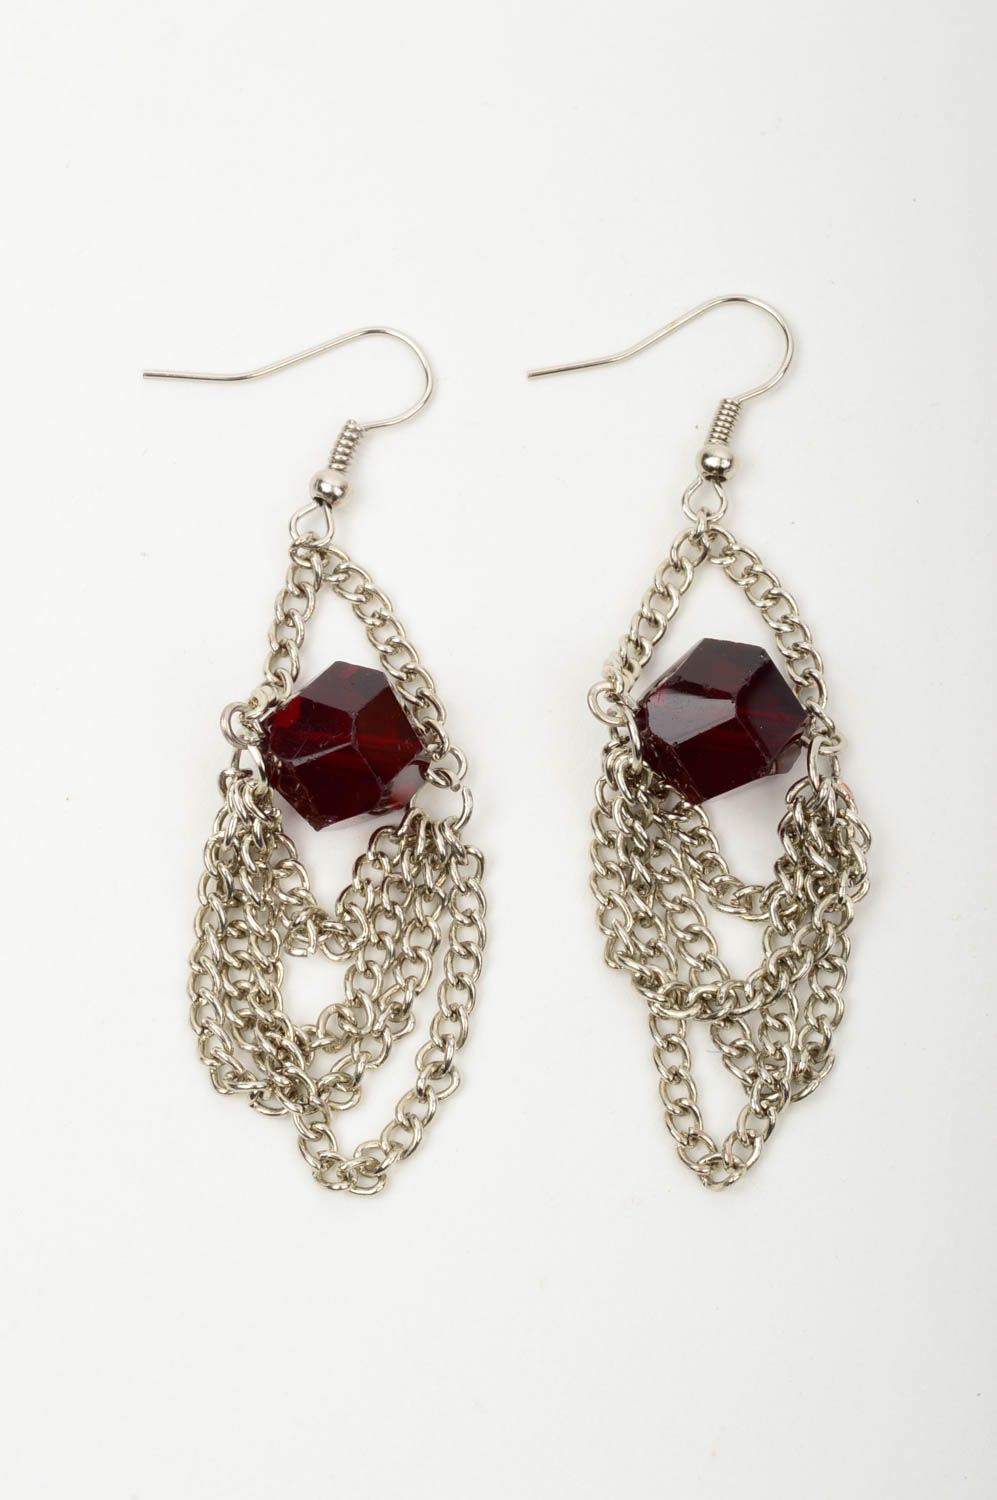 Handmade earrings designer earrings unusual accessories fashion jewelry photo 3